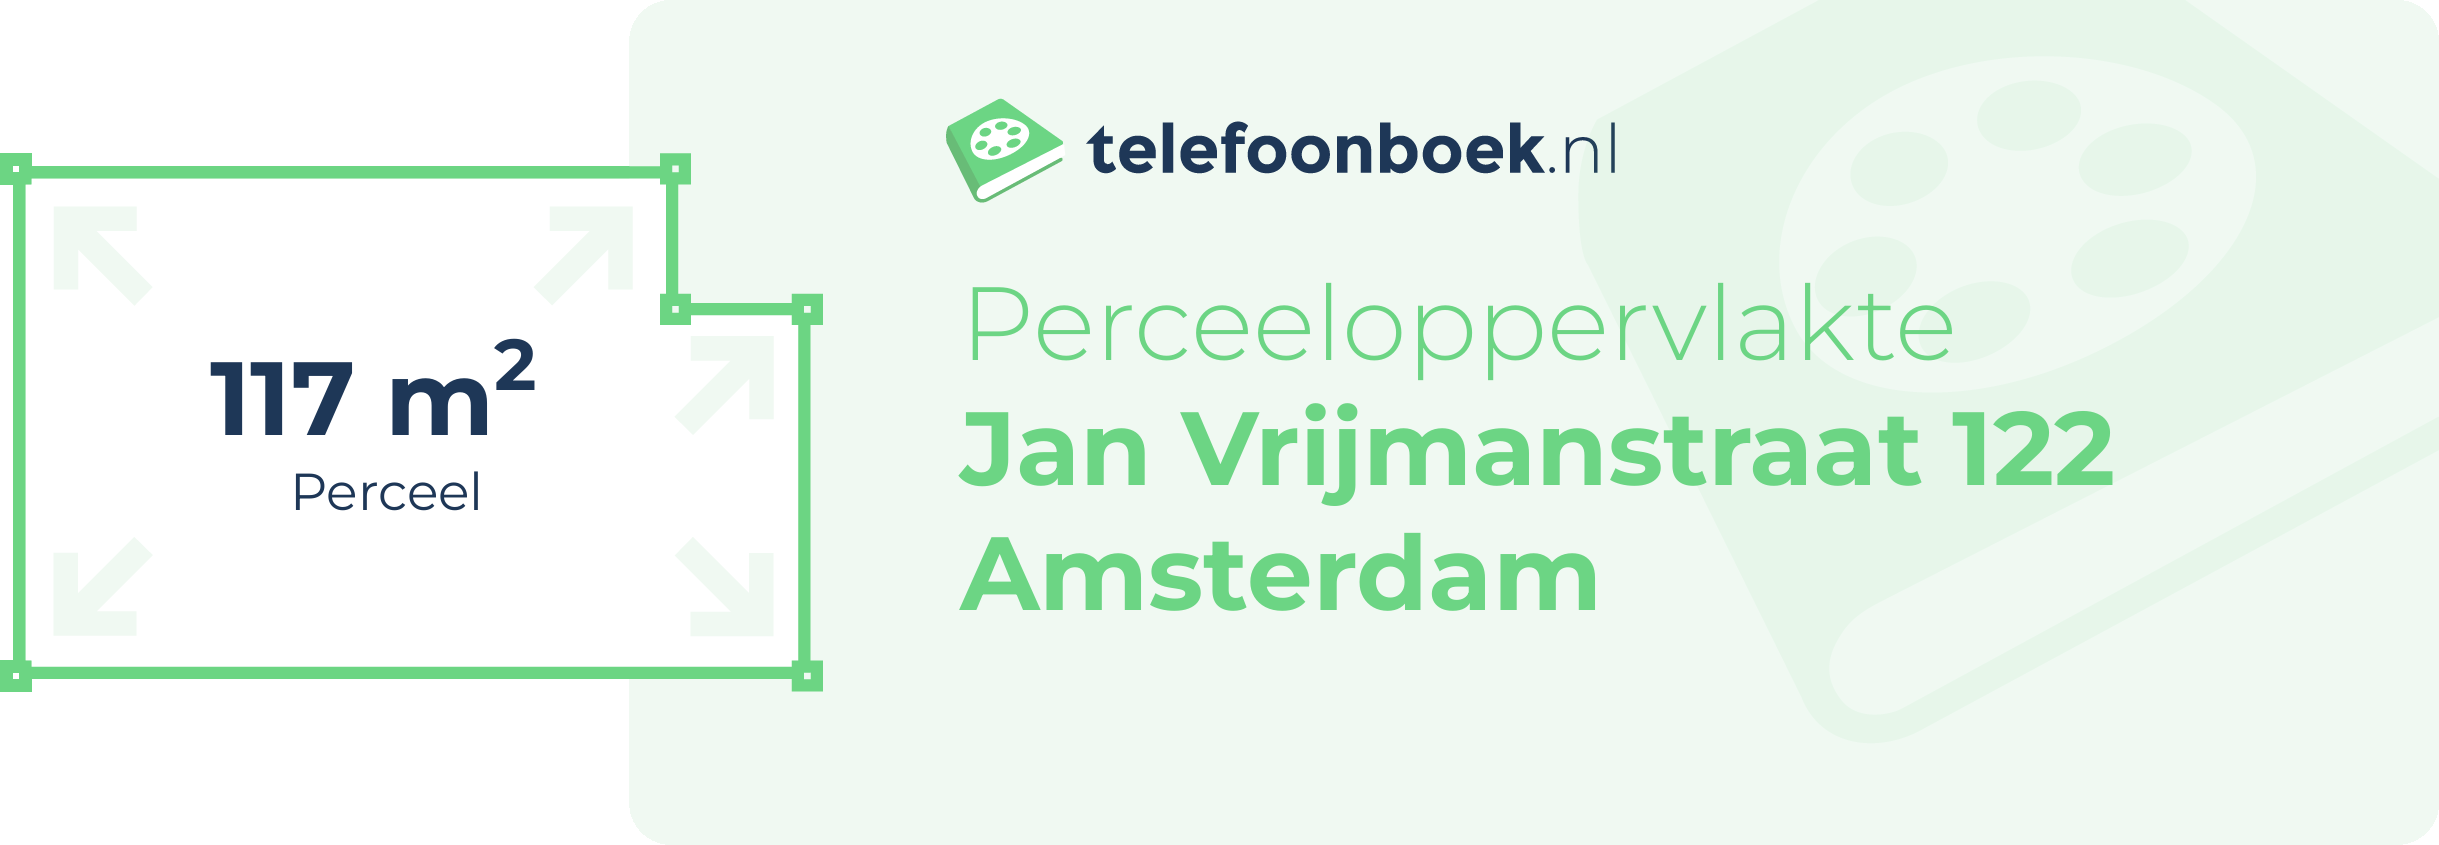 Perceeloppervlakte Jan Vrijmanstraat 122 Amsterdam